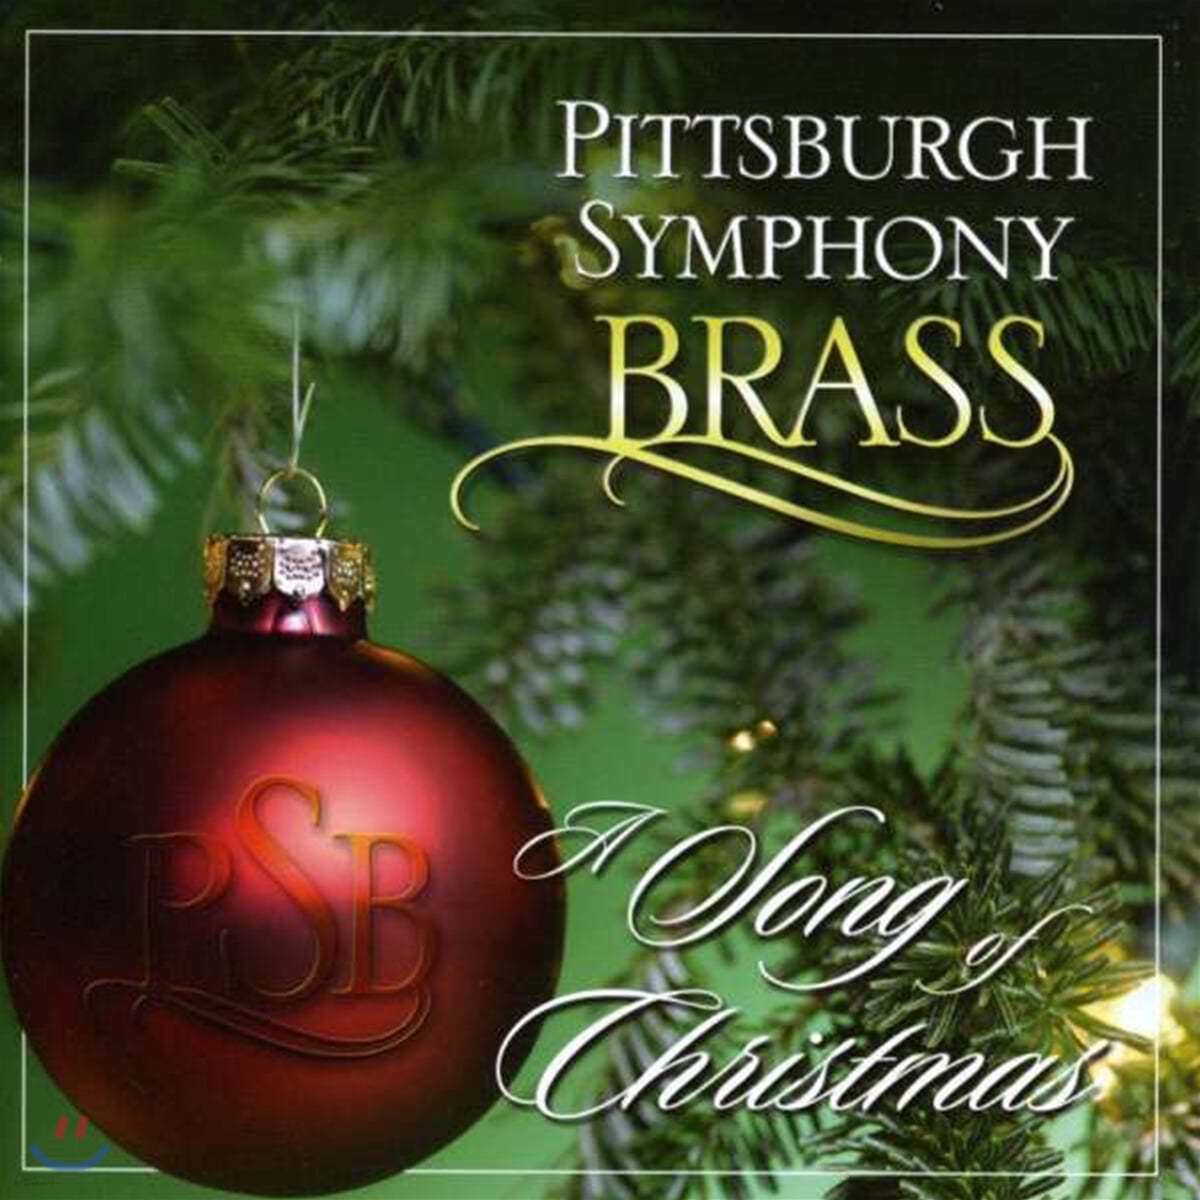 Pittsburgh Symphony Brass 크리스마스의 노래 (A Song of Christmas)